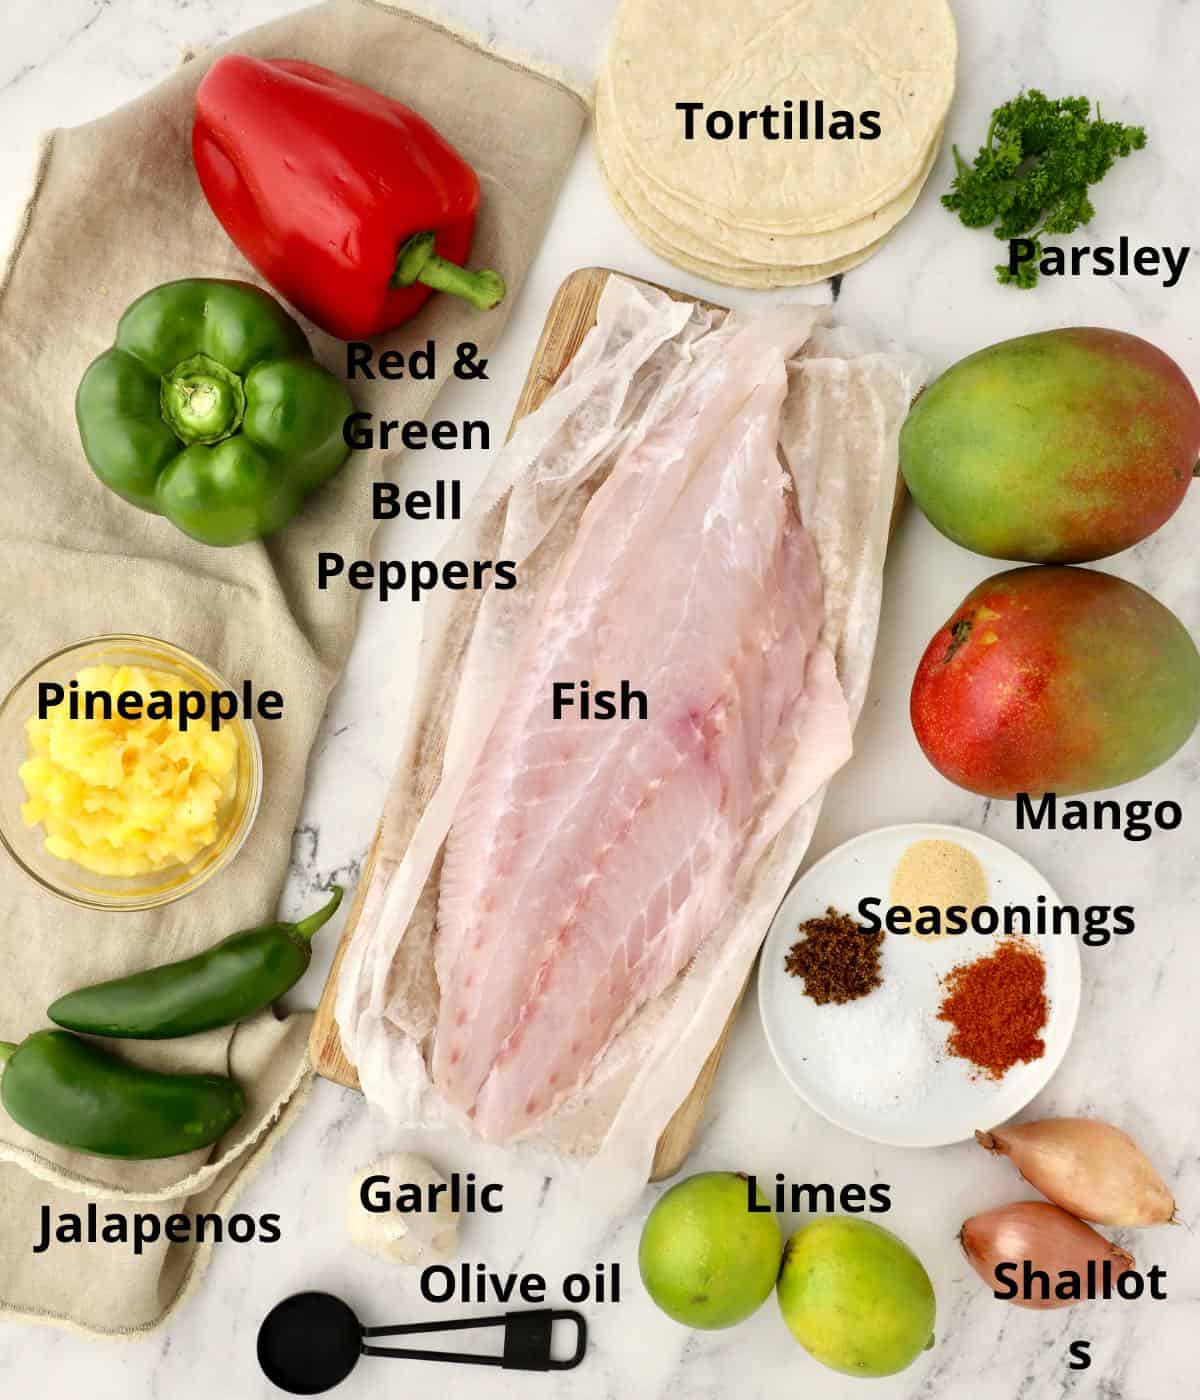 Fish fillets plus ingredients for mango salsa. 